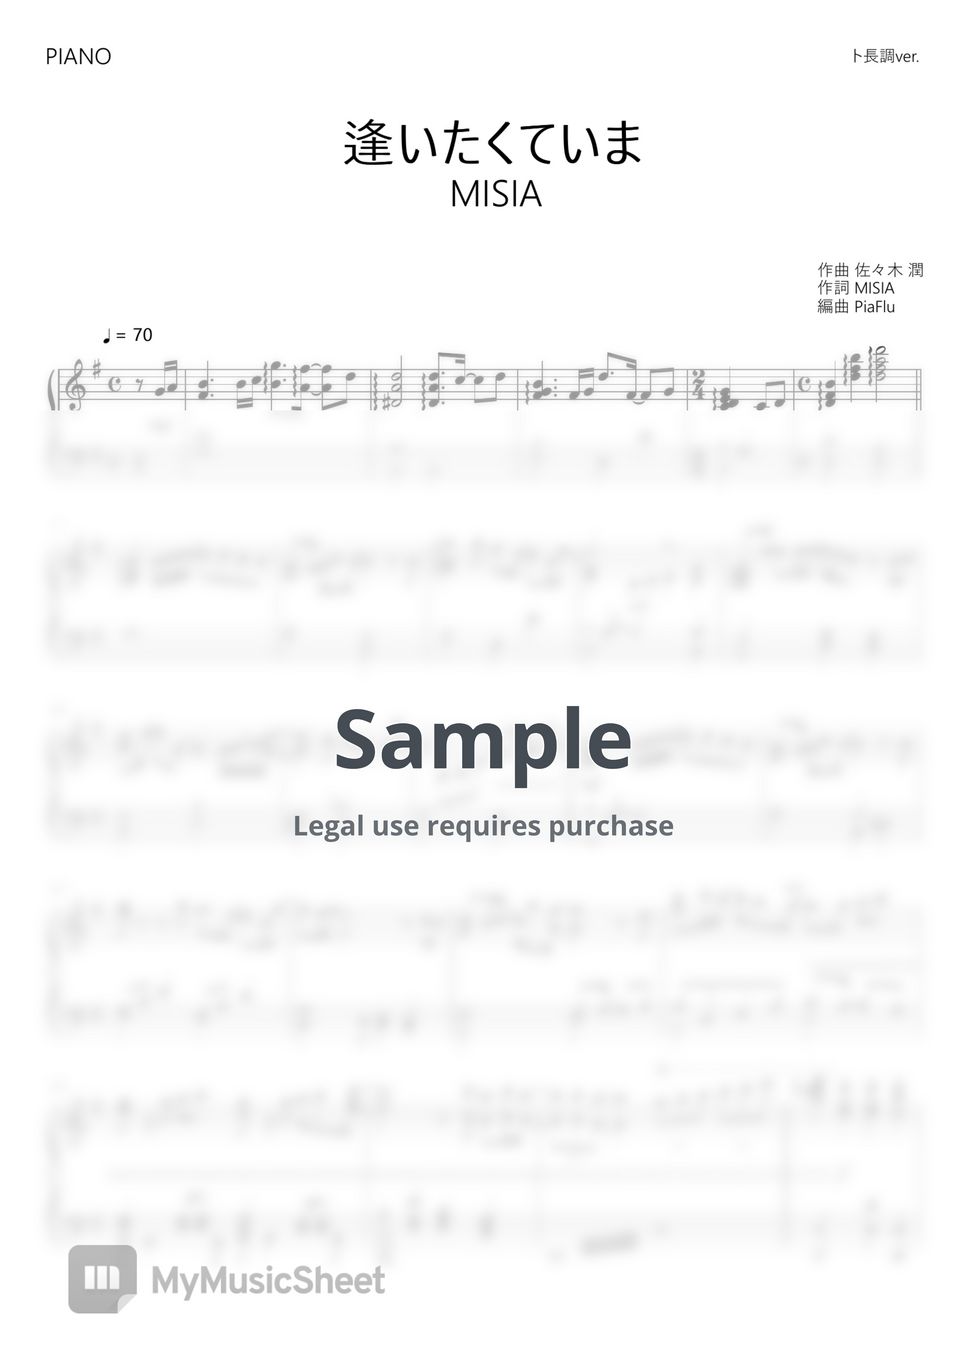 MISIA - 逢いたくていま / MISIA - Aitakute Ima (Piano) by PiaFlu / ピアフル Piano&Flute